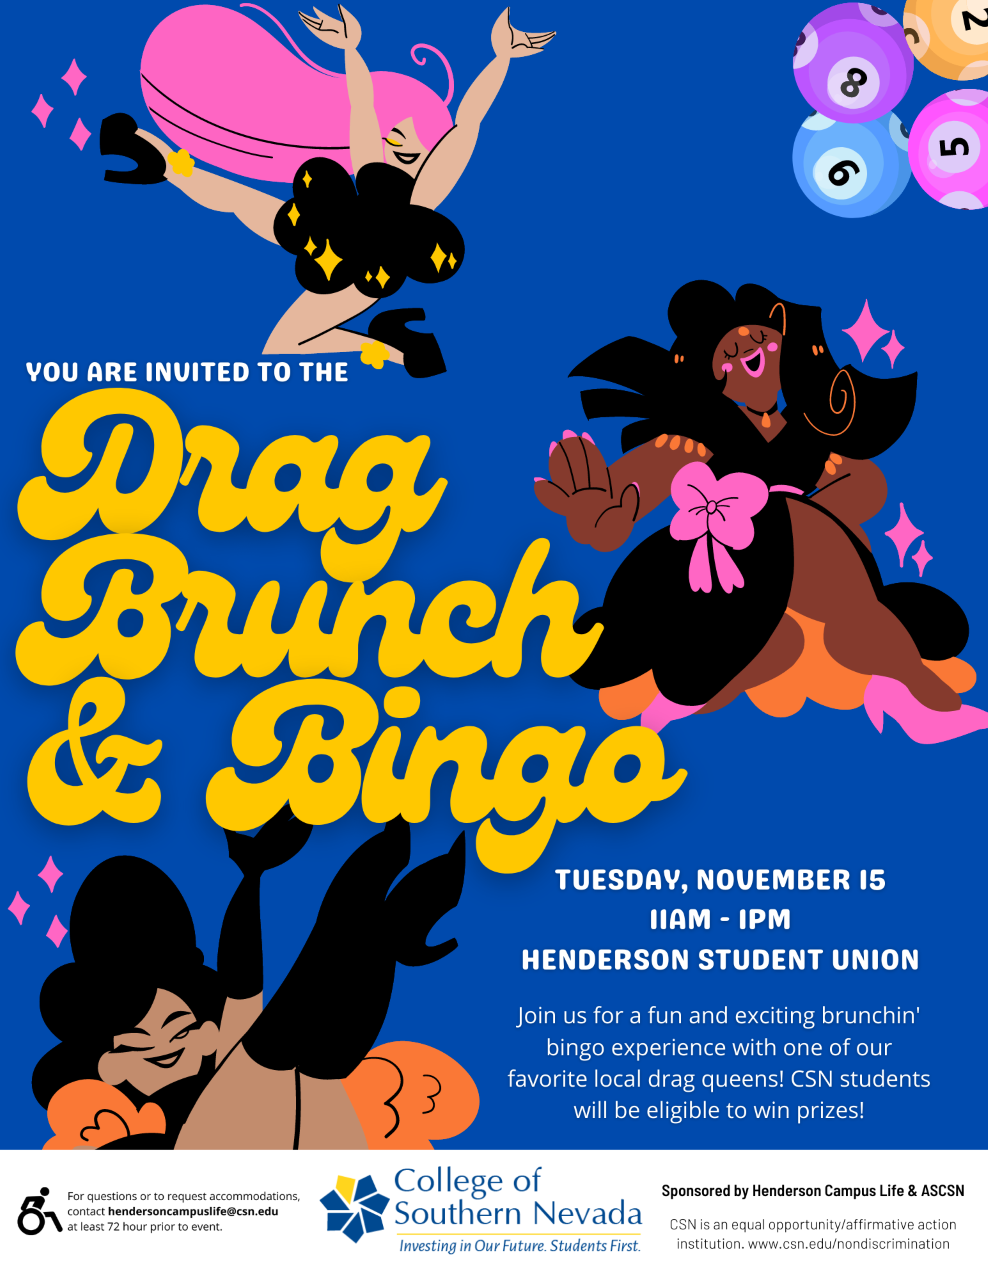 November 15, 2022 brunch bingo event flyer